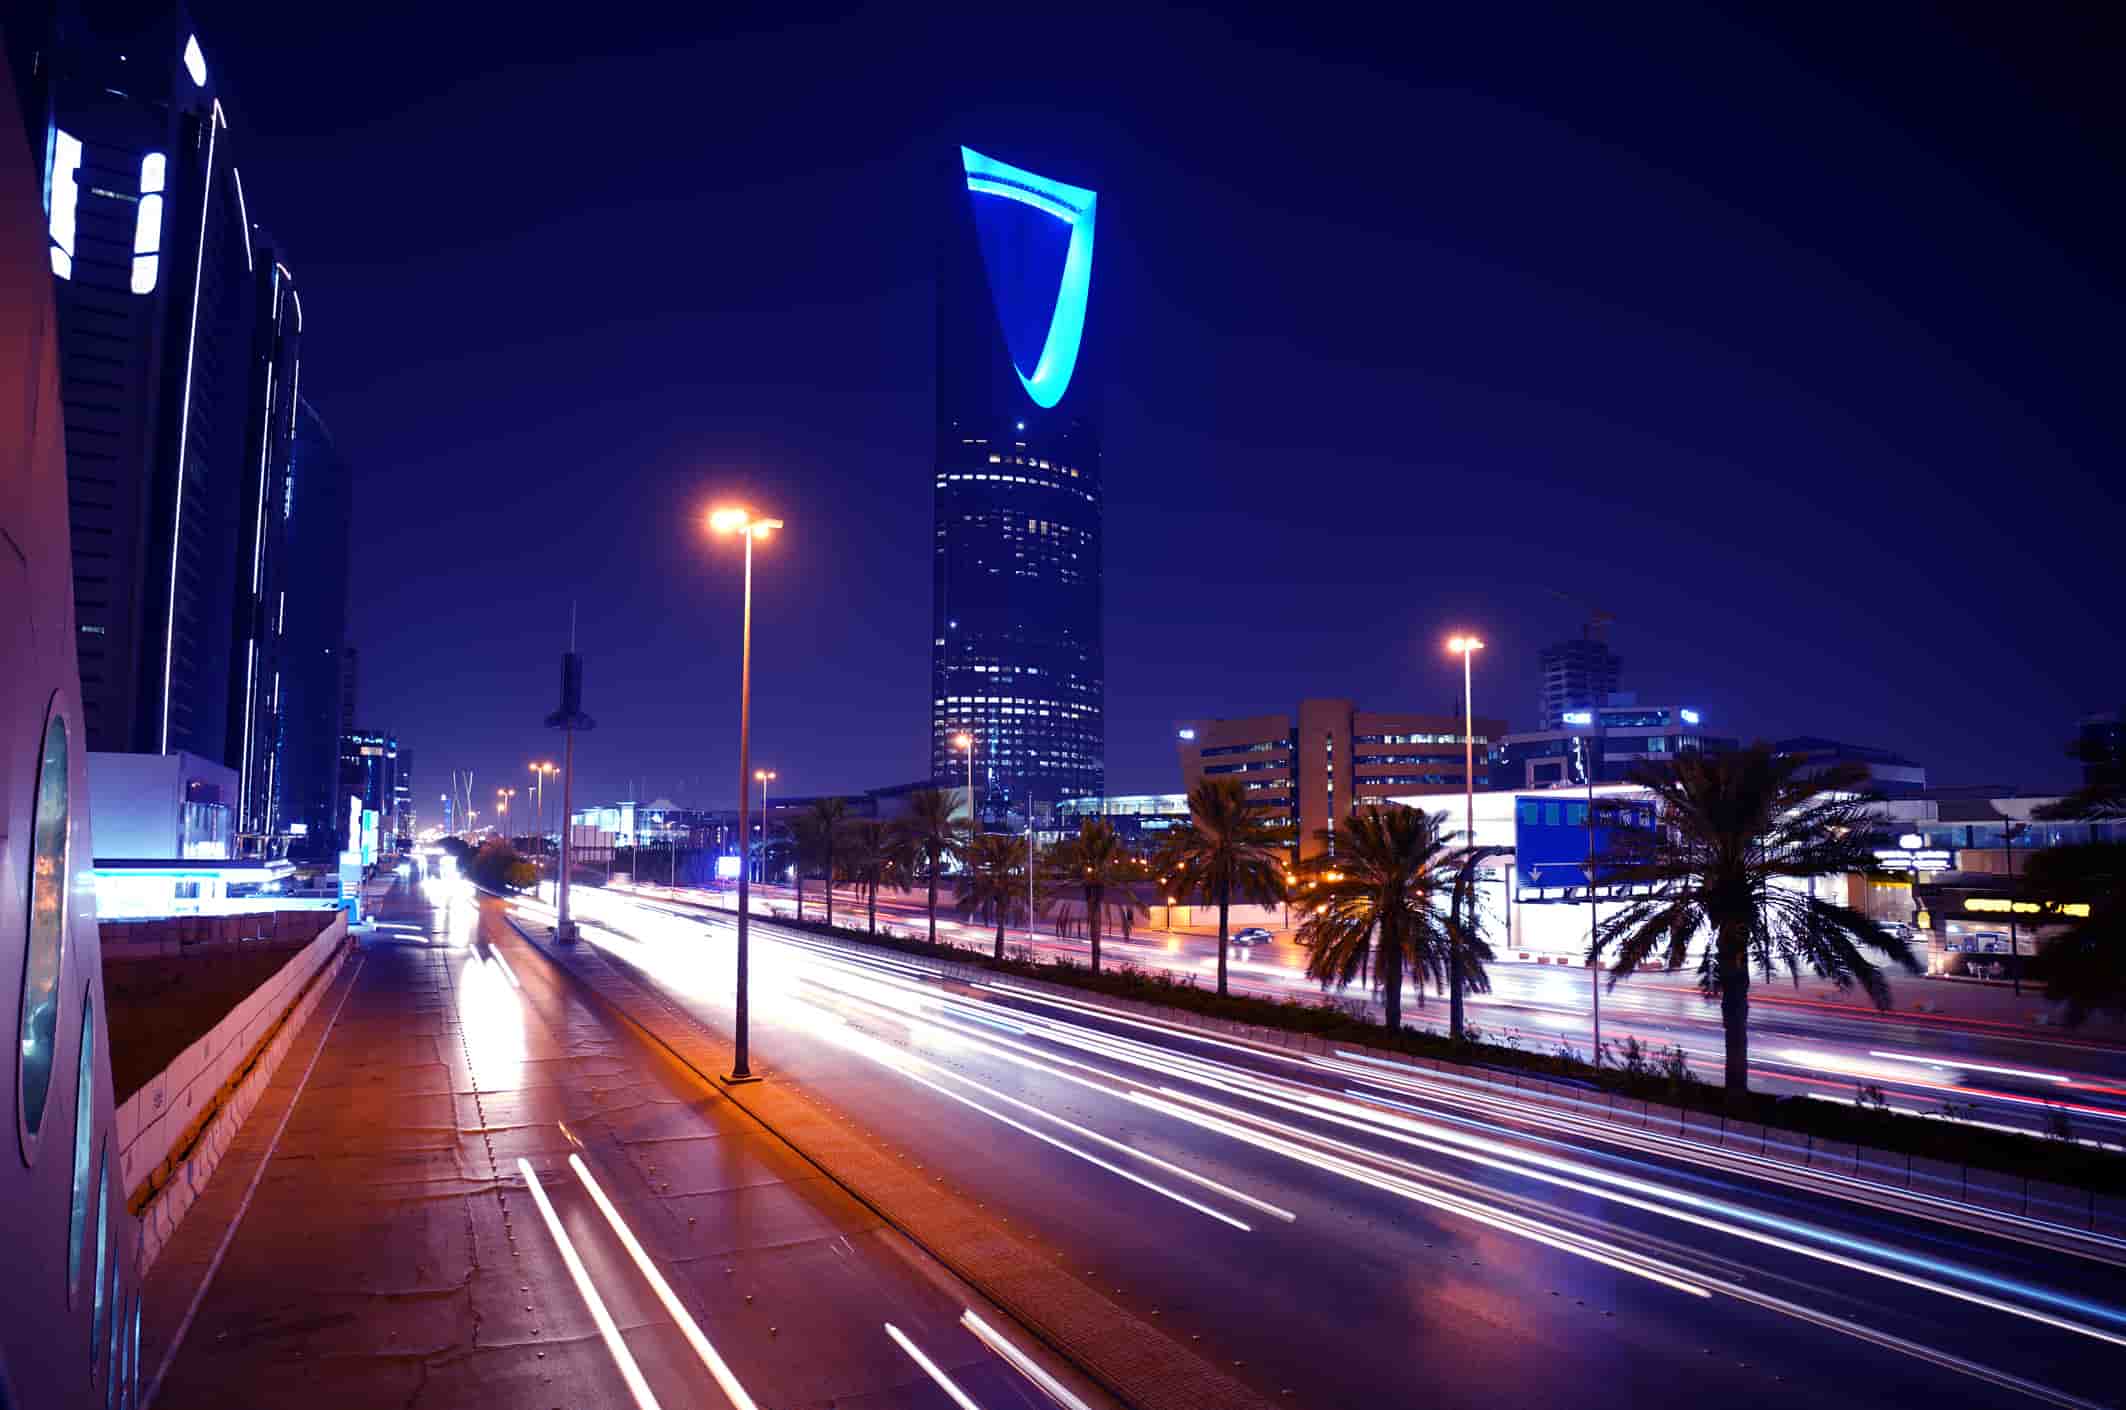 night view of a Saudi Arabia skyscraper